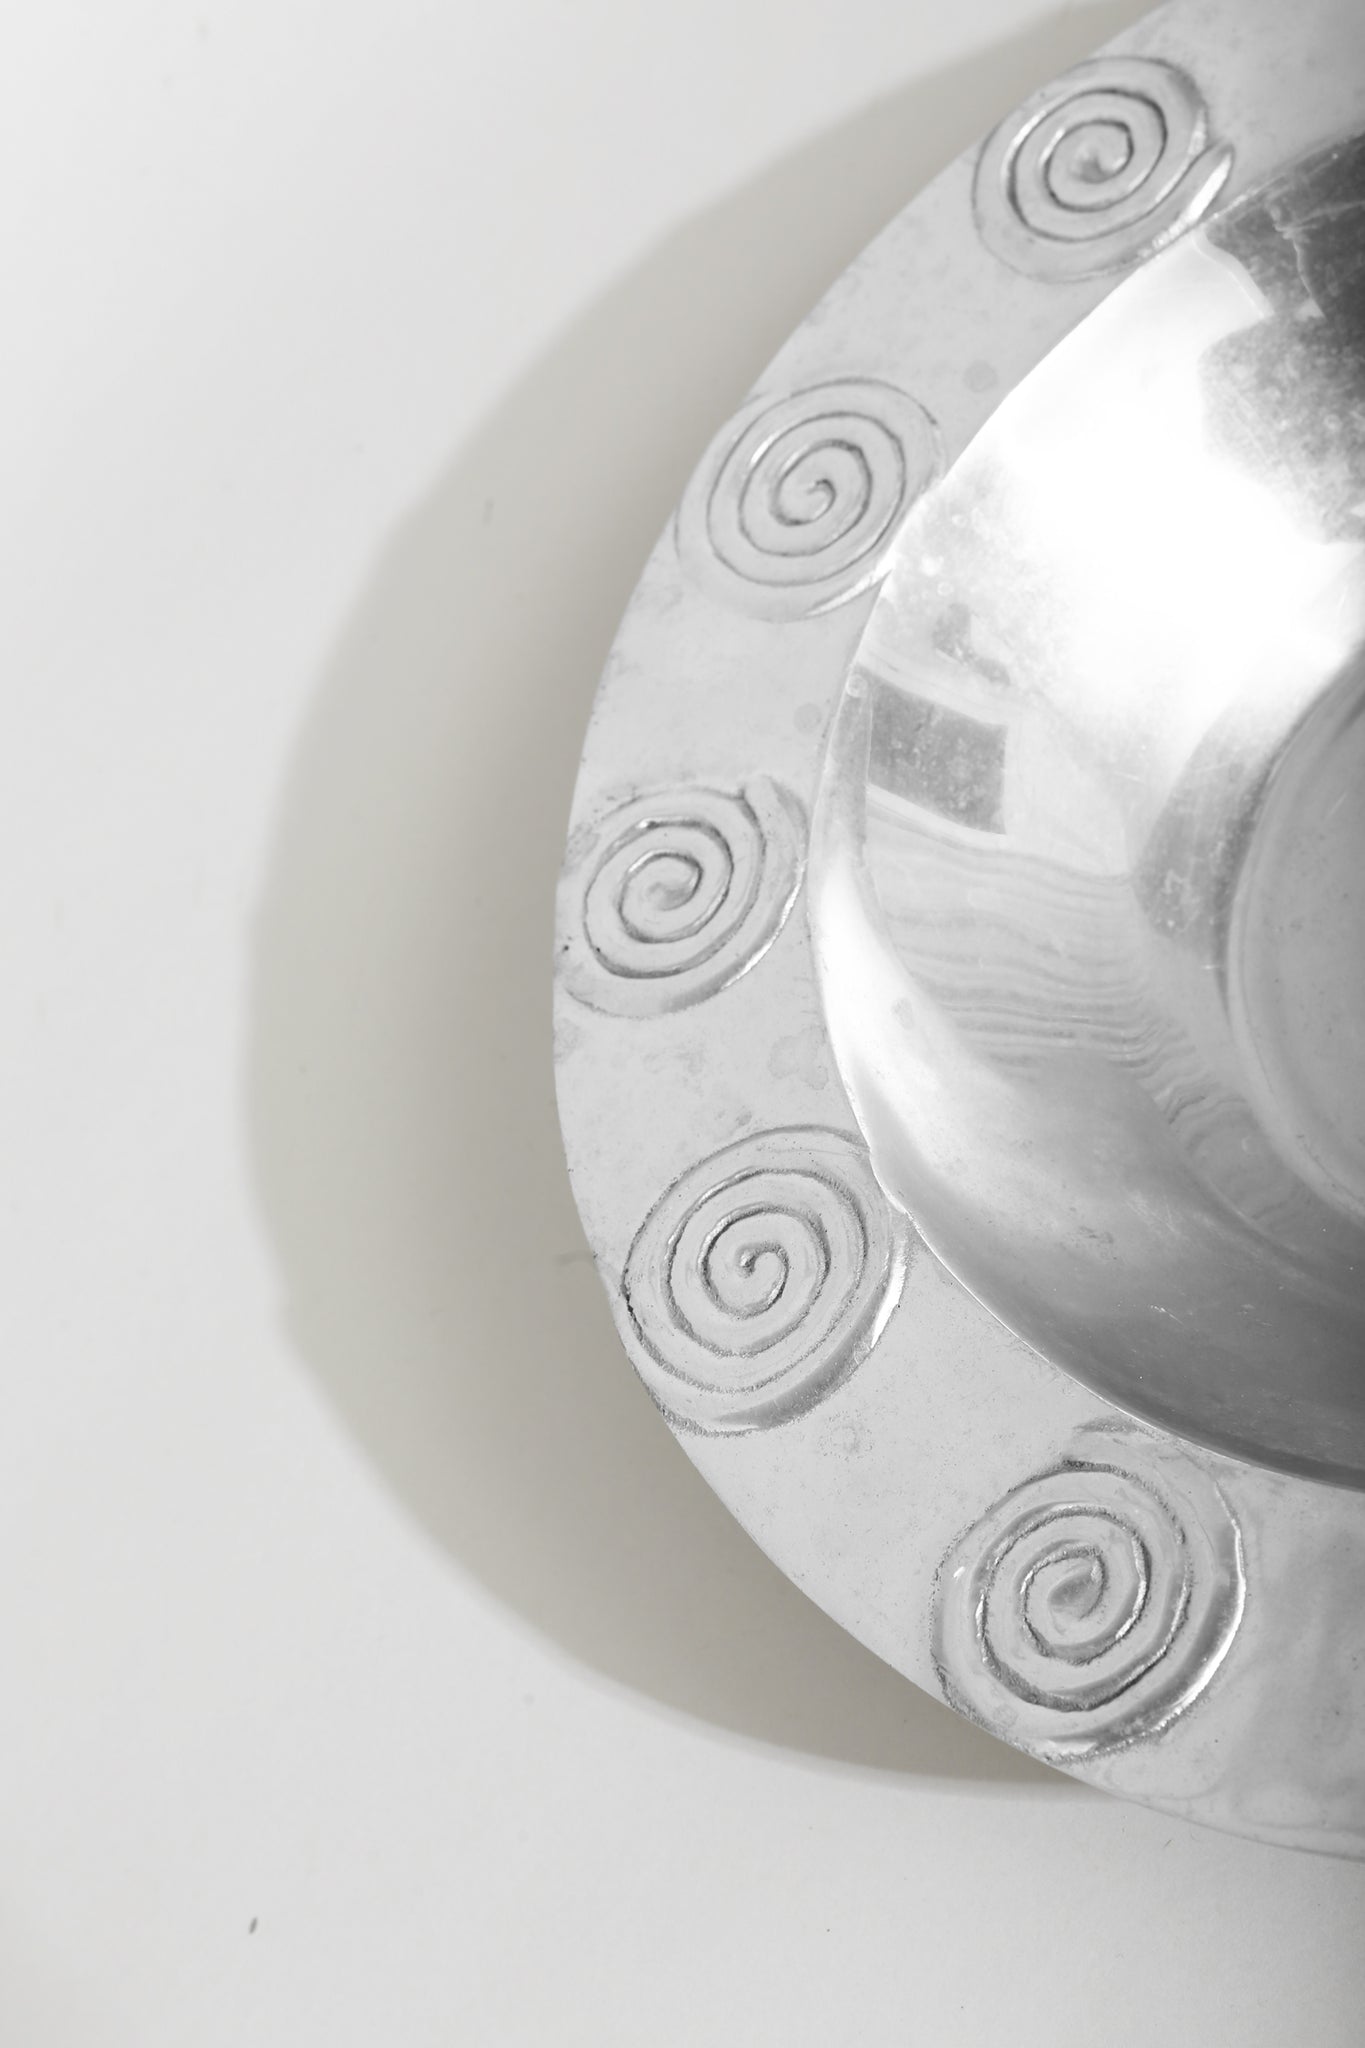 Silver Spiral Bowl